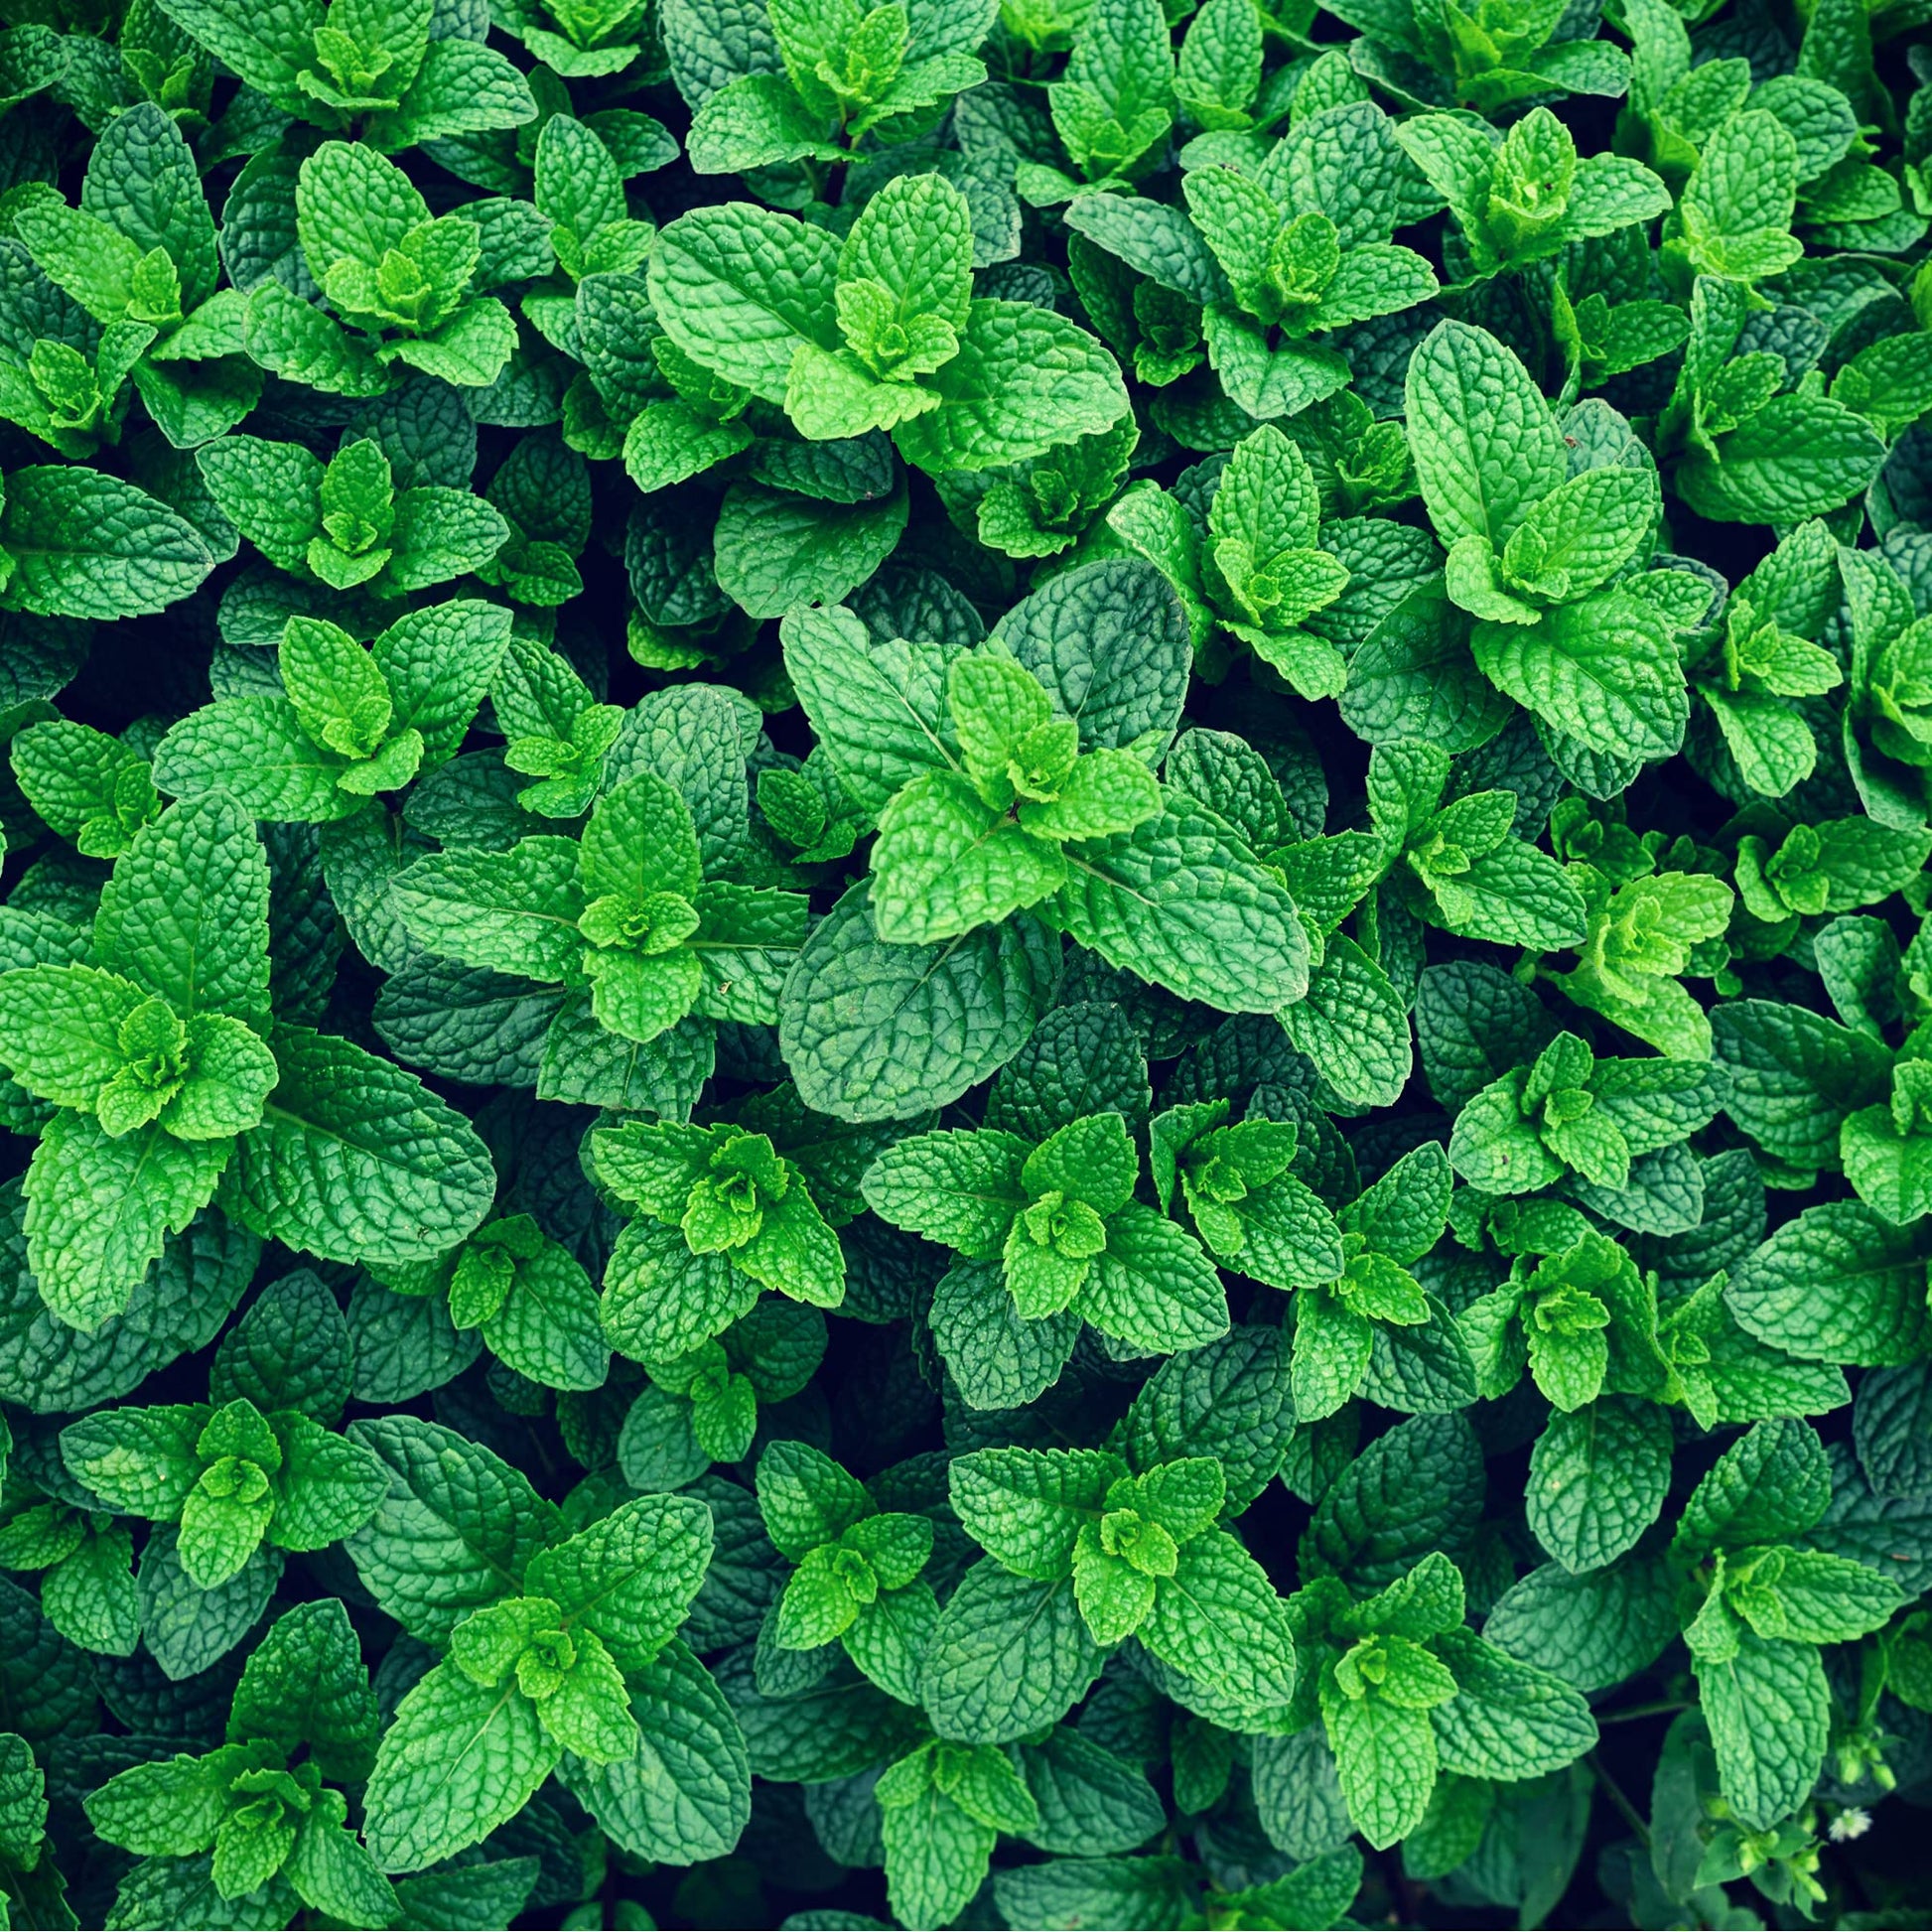 Herb Plants - Garden Mint - 3 x Full Plants in 9cm Pots - AcquaGarden